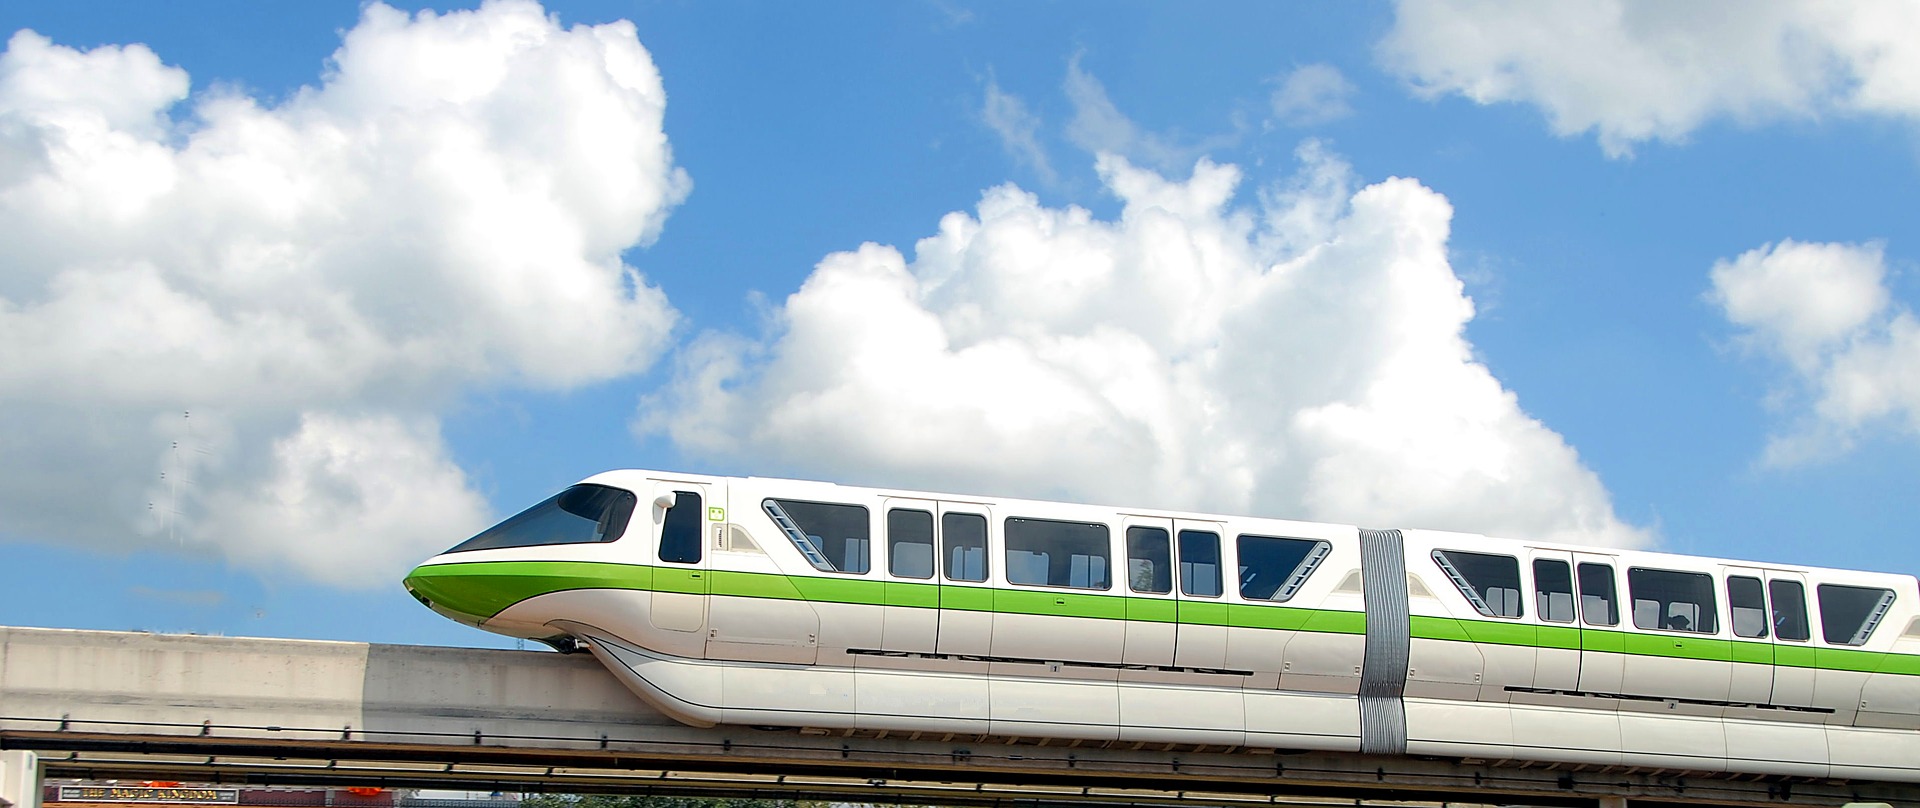 disney monorail